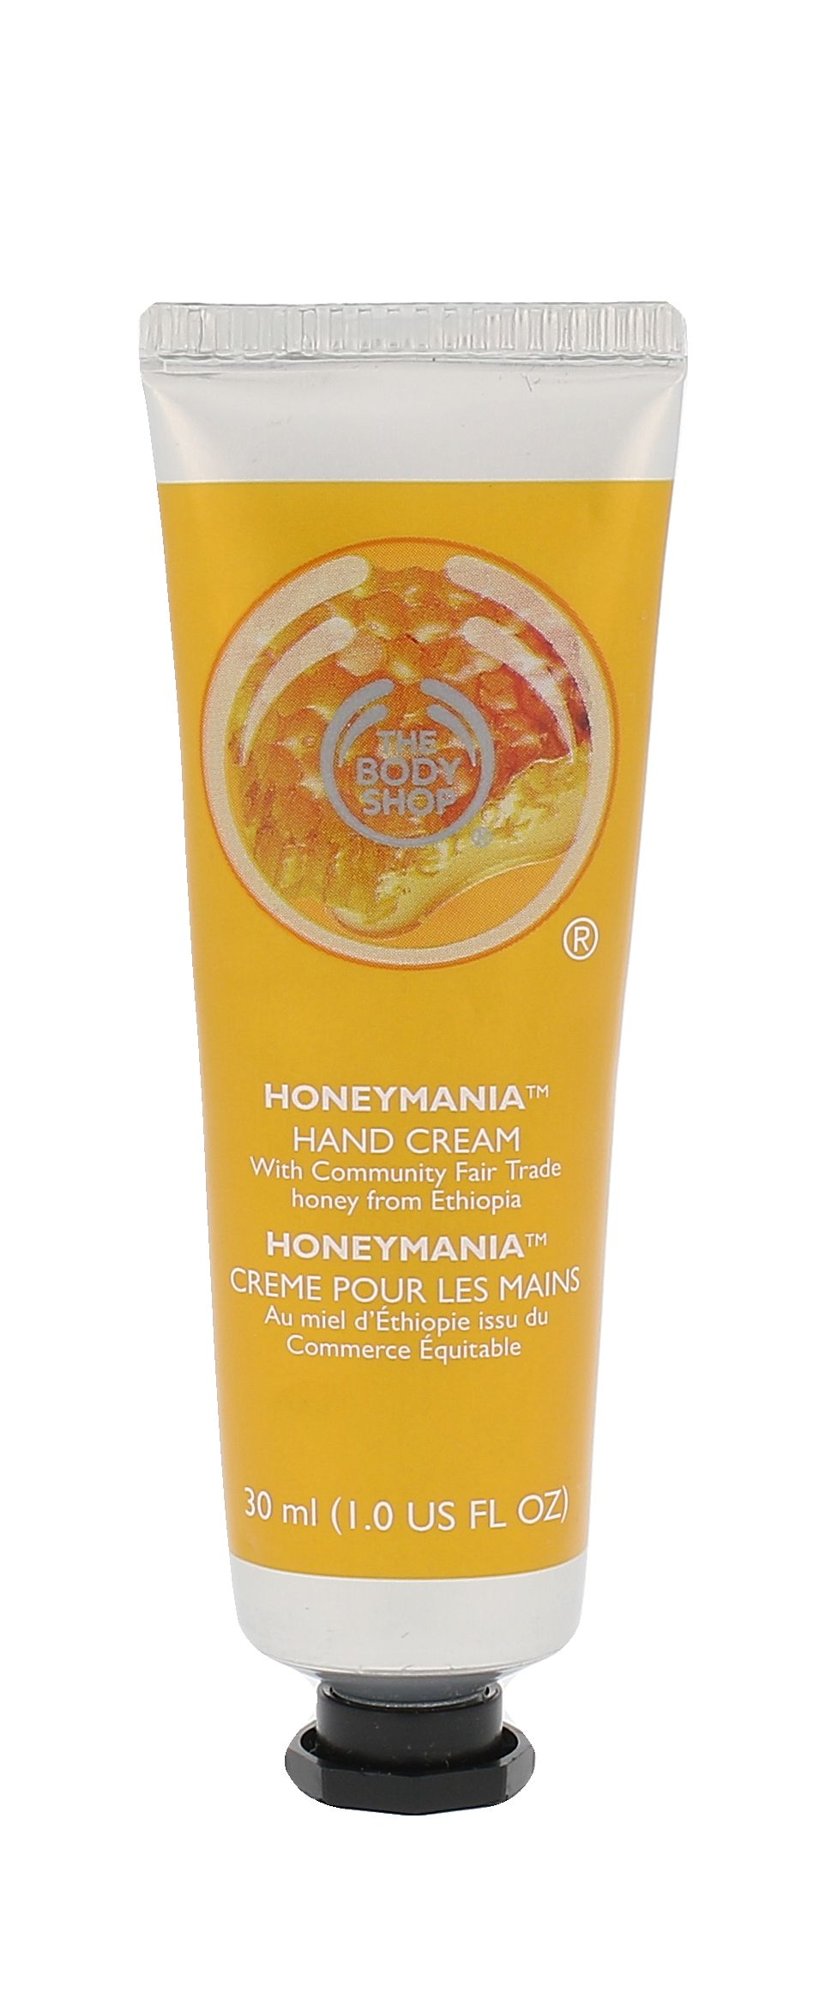 The Body Shop Honeymania Hand Cream